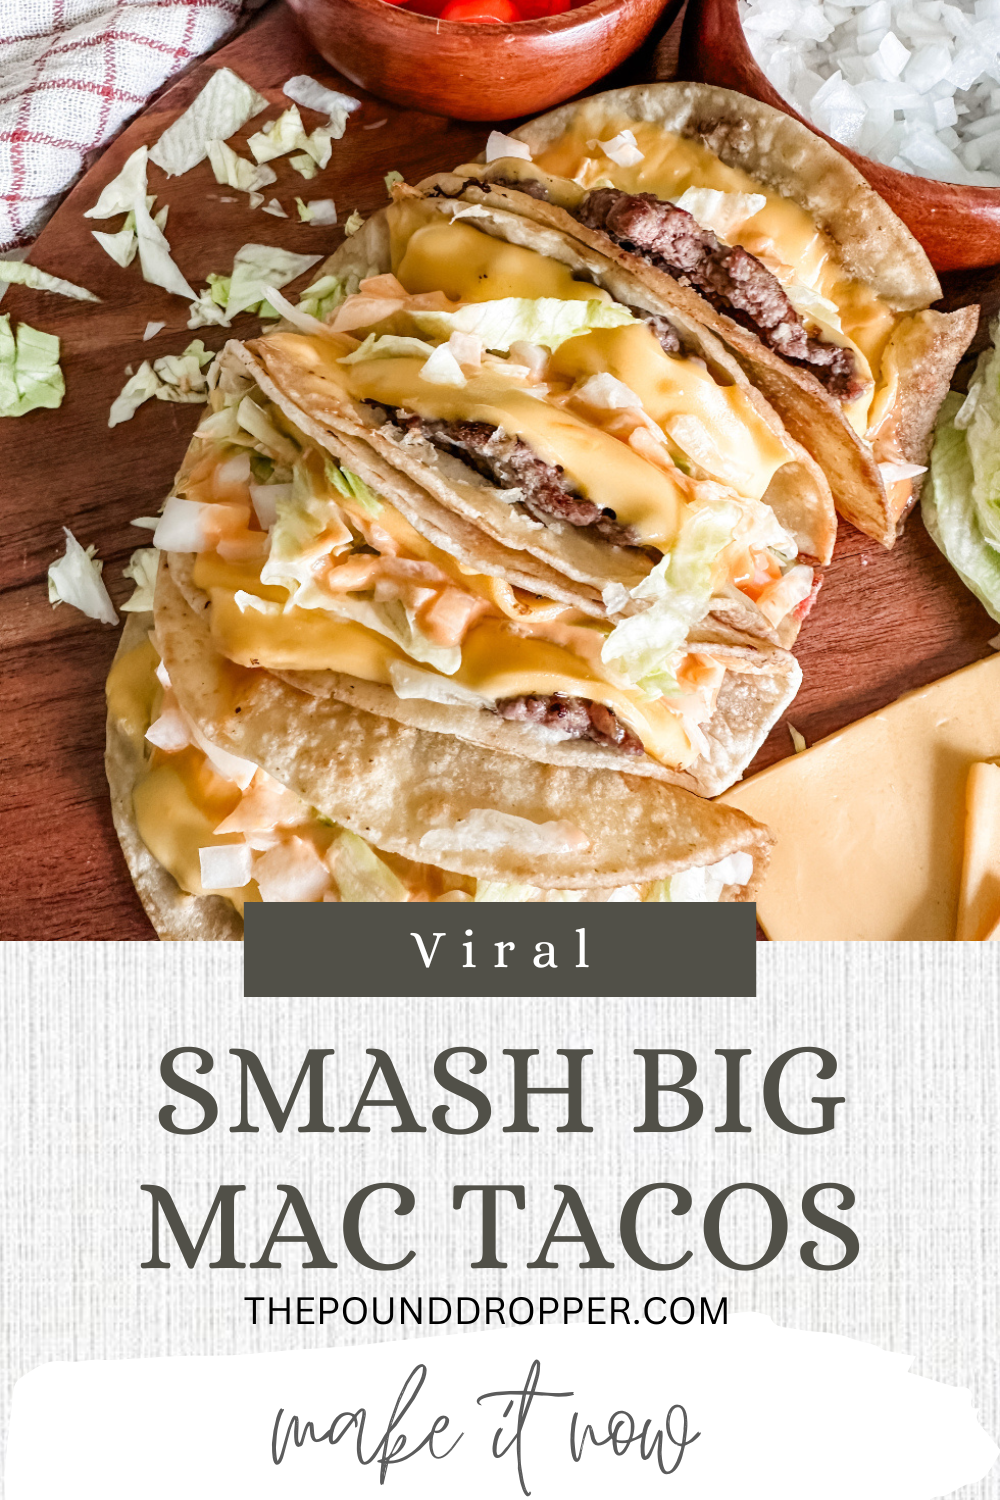 Smash Big Mac Tacos via @pounddropper